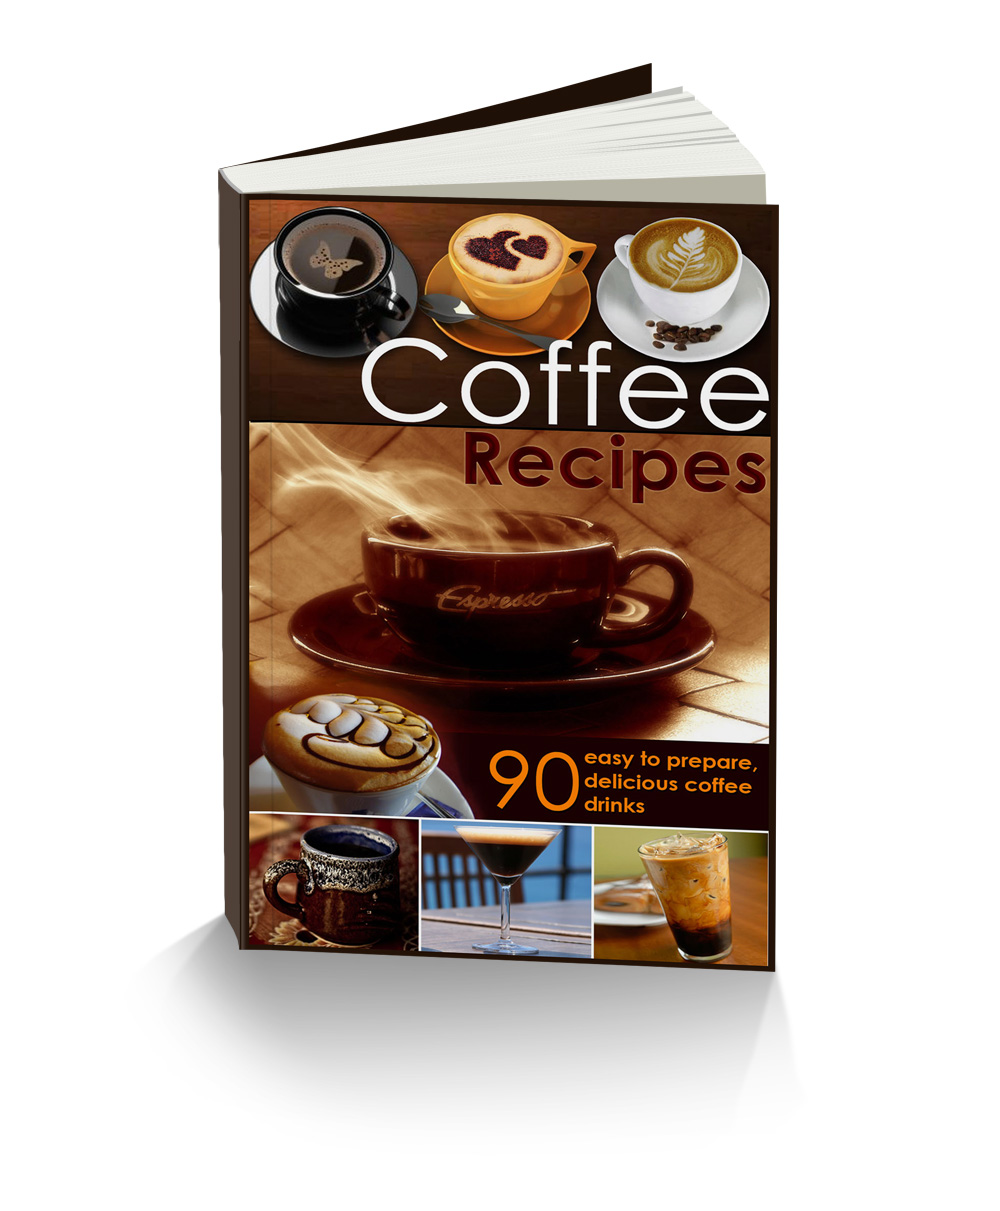 Coffee Recipes: Coffee recipes free ebook download